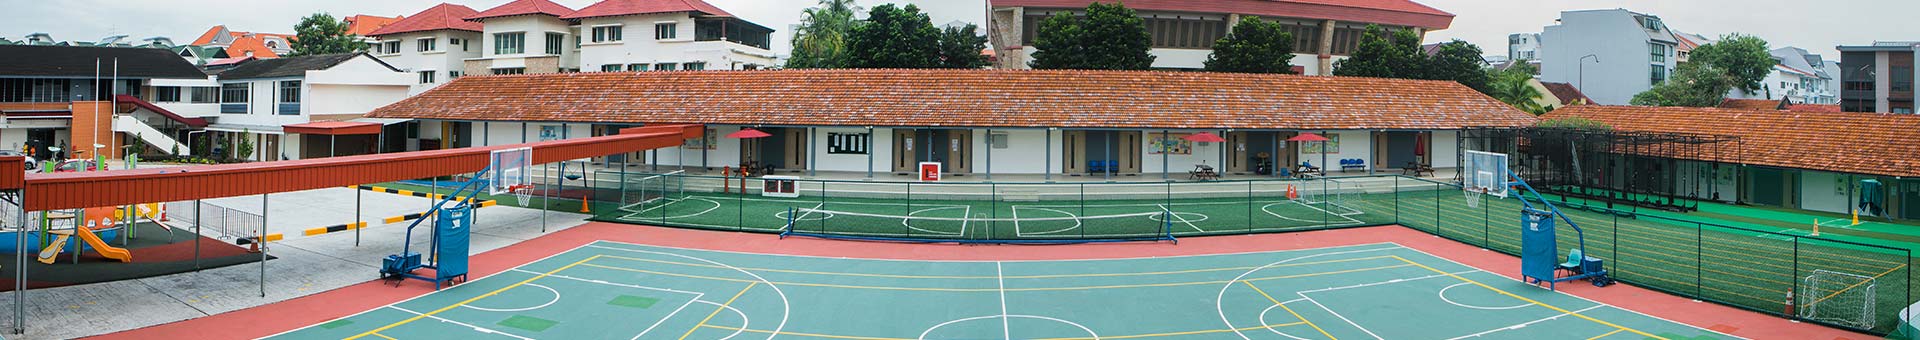 Facilities - Primary Campus